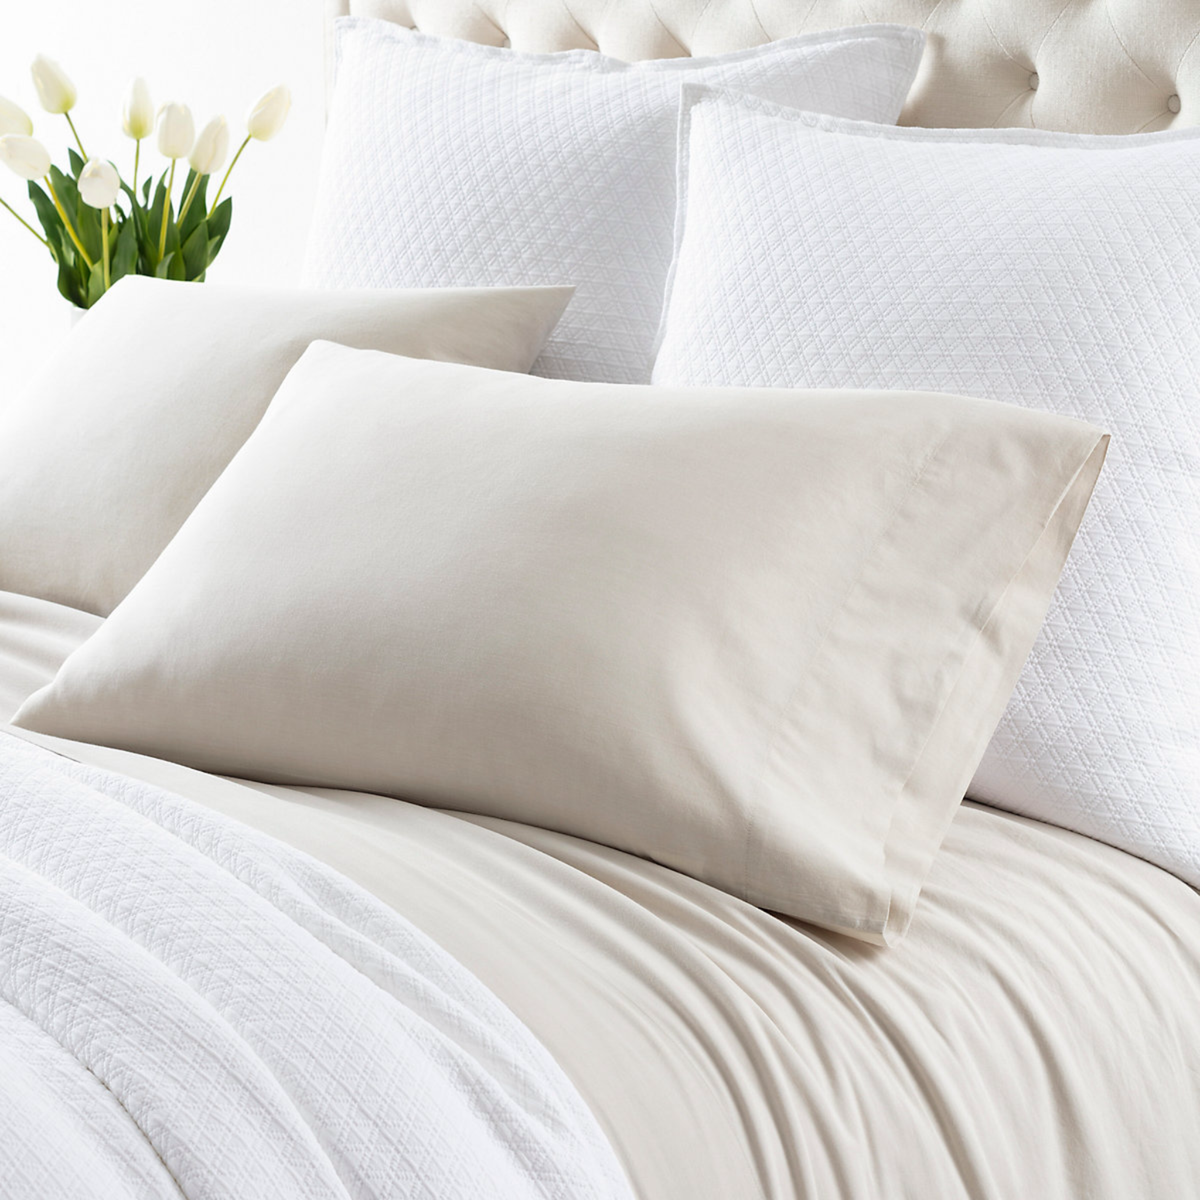 Pillowcase Closeup of Pine Cone Hill Cozy Cotton Bedding in Natural Color